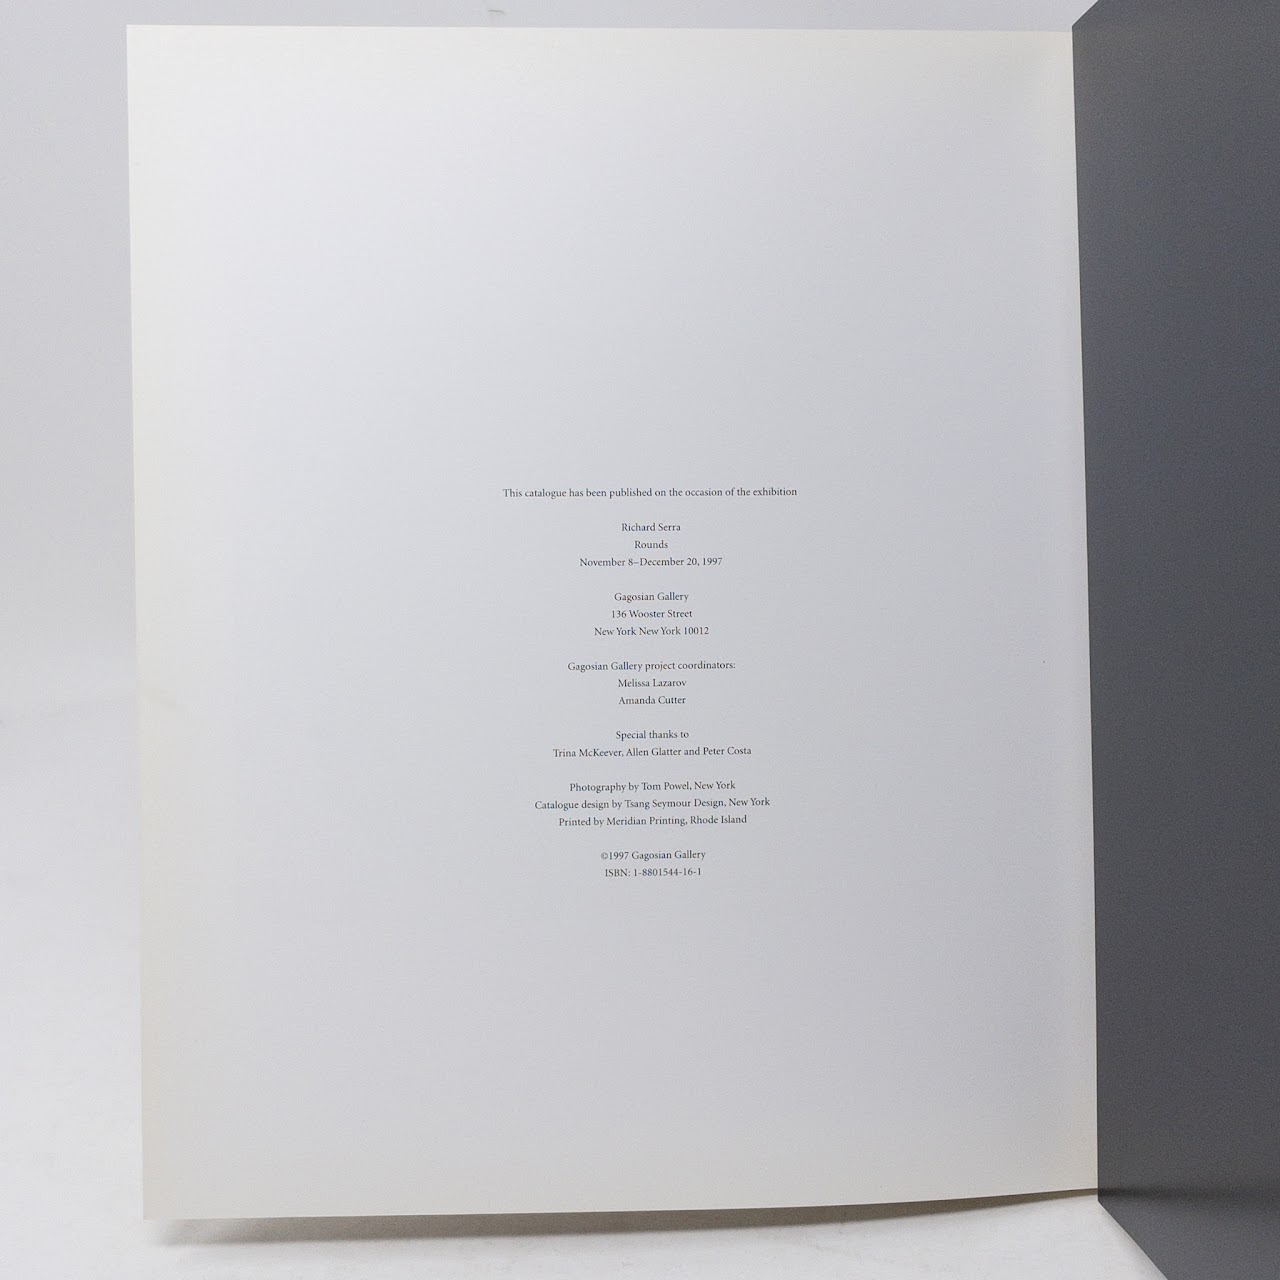 Richard Serra: Rounds Exhibition Catalogue